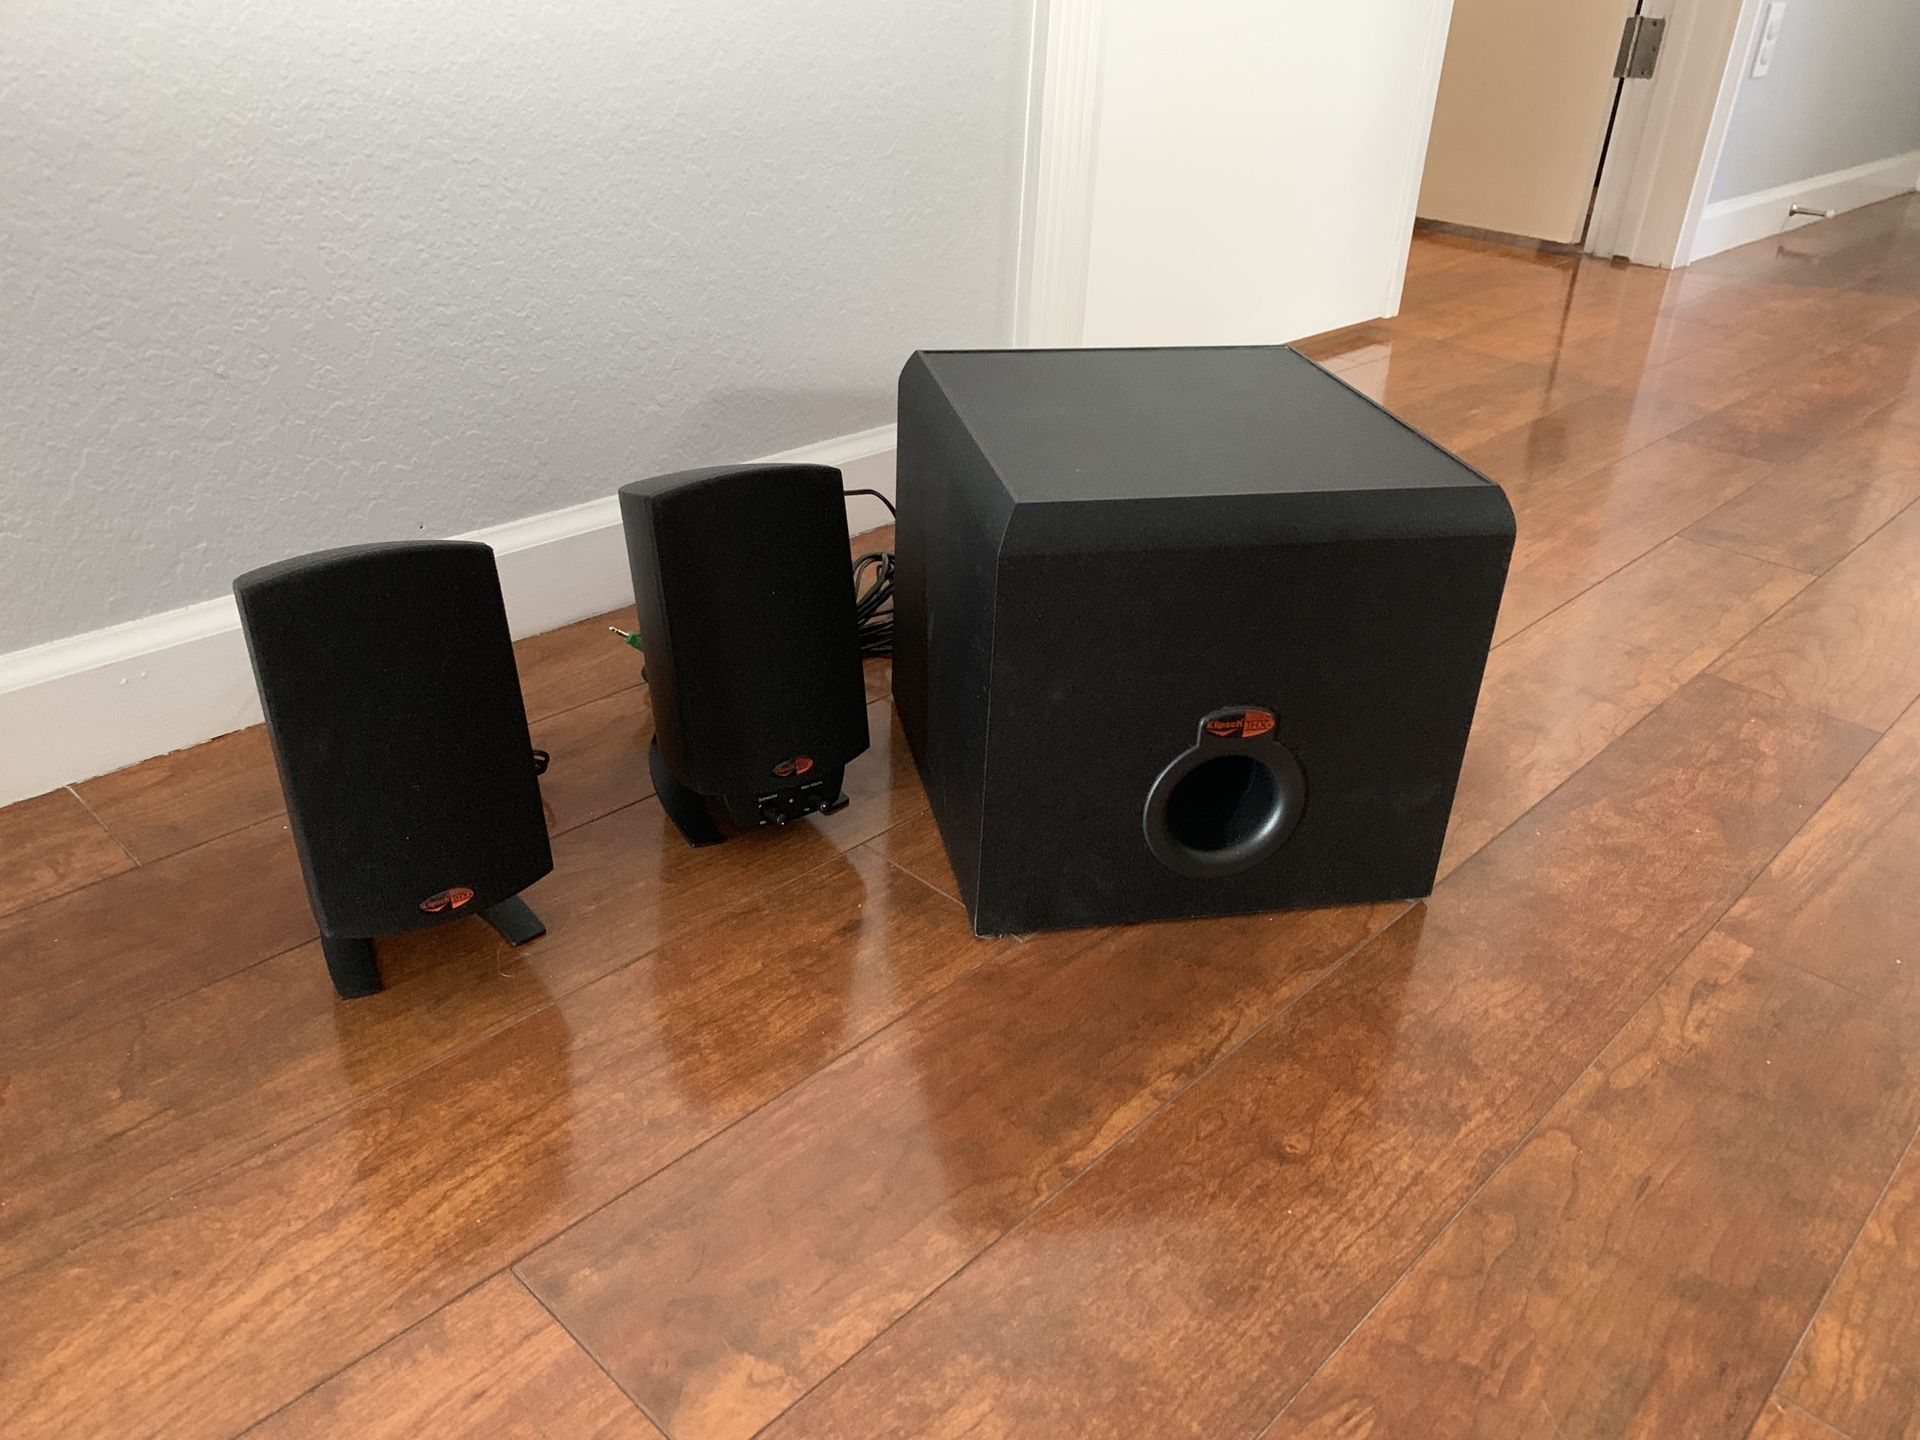 Klipsch ProMedia 2.1 THX speakers with subwoofer